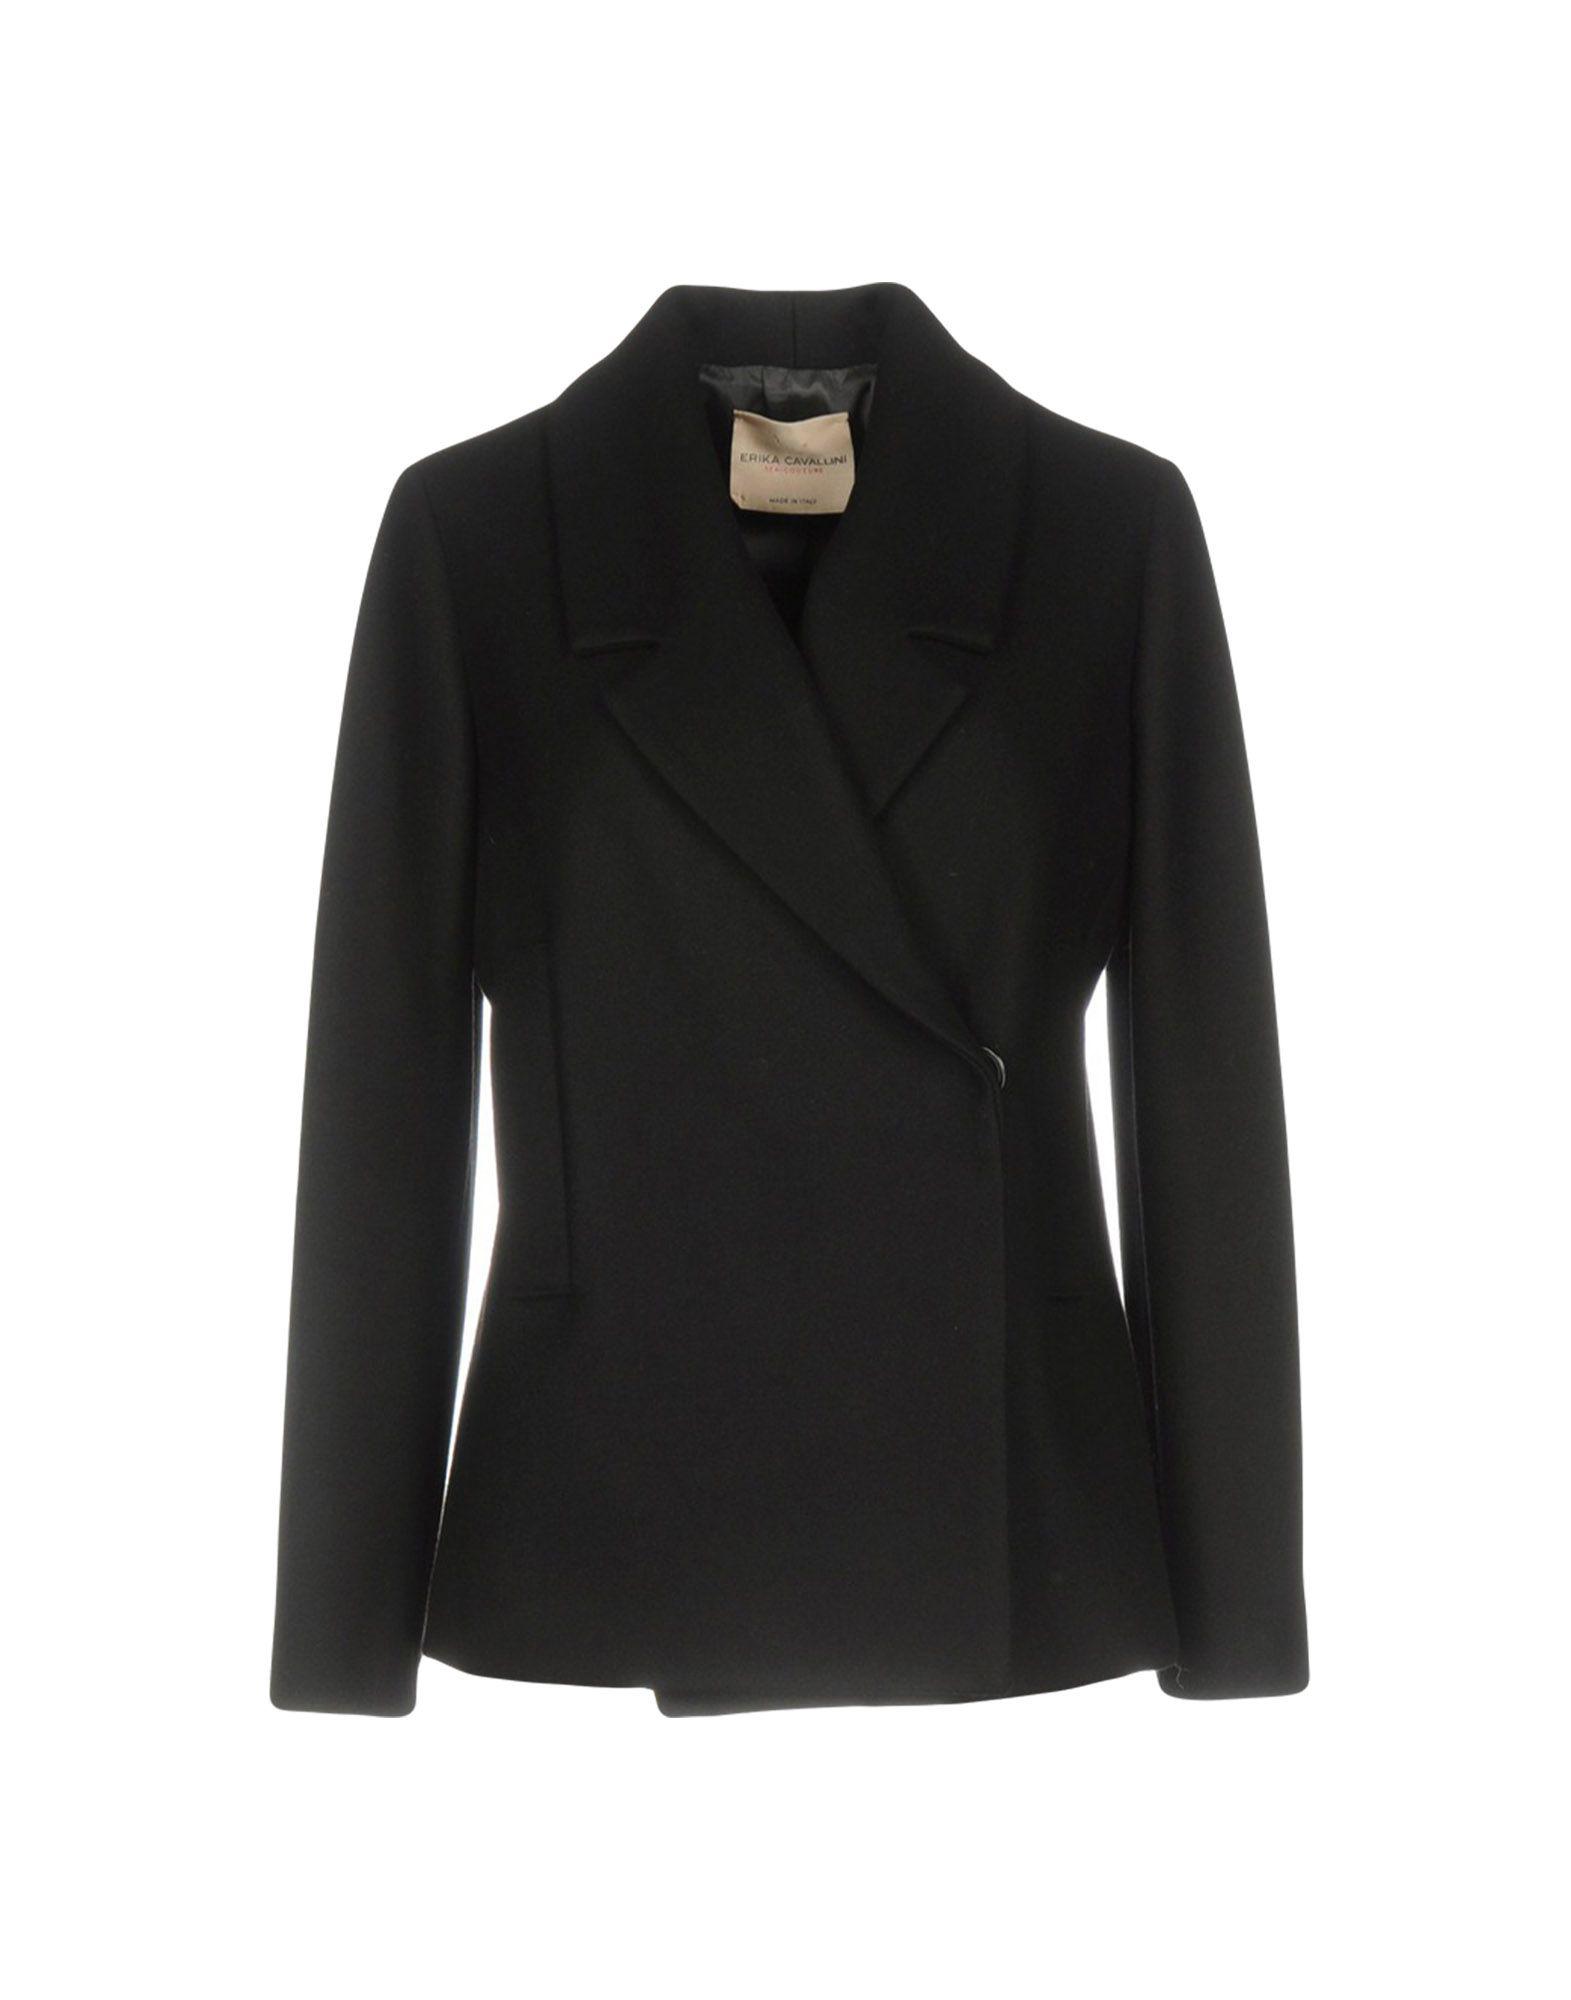 Erika Cavallini Semi Couture Wool Coat in Black - Lyst